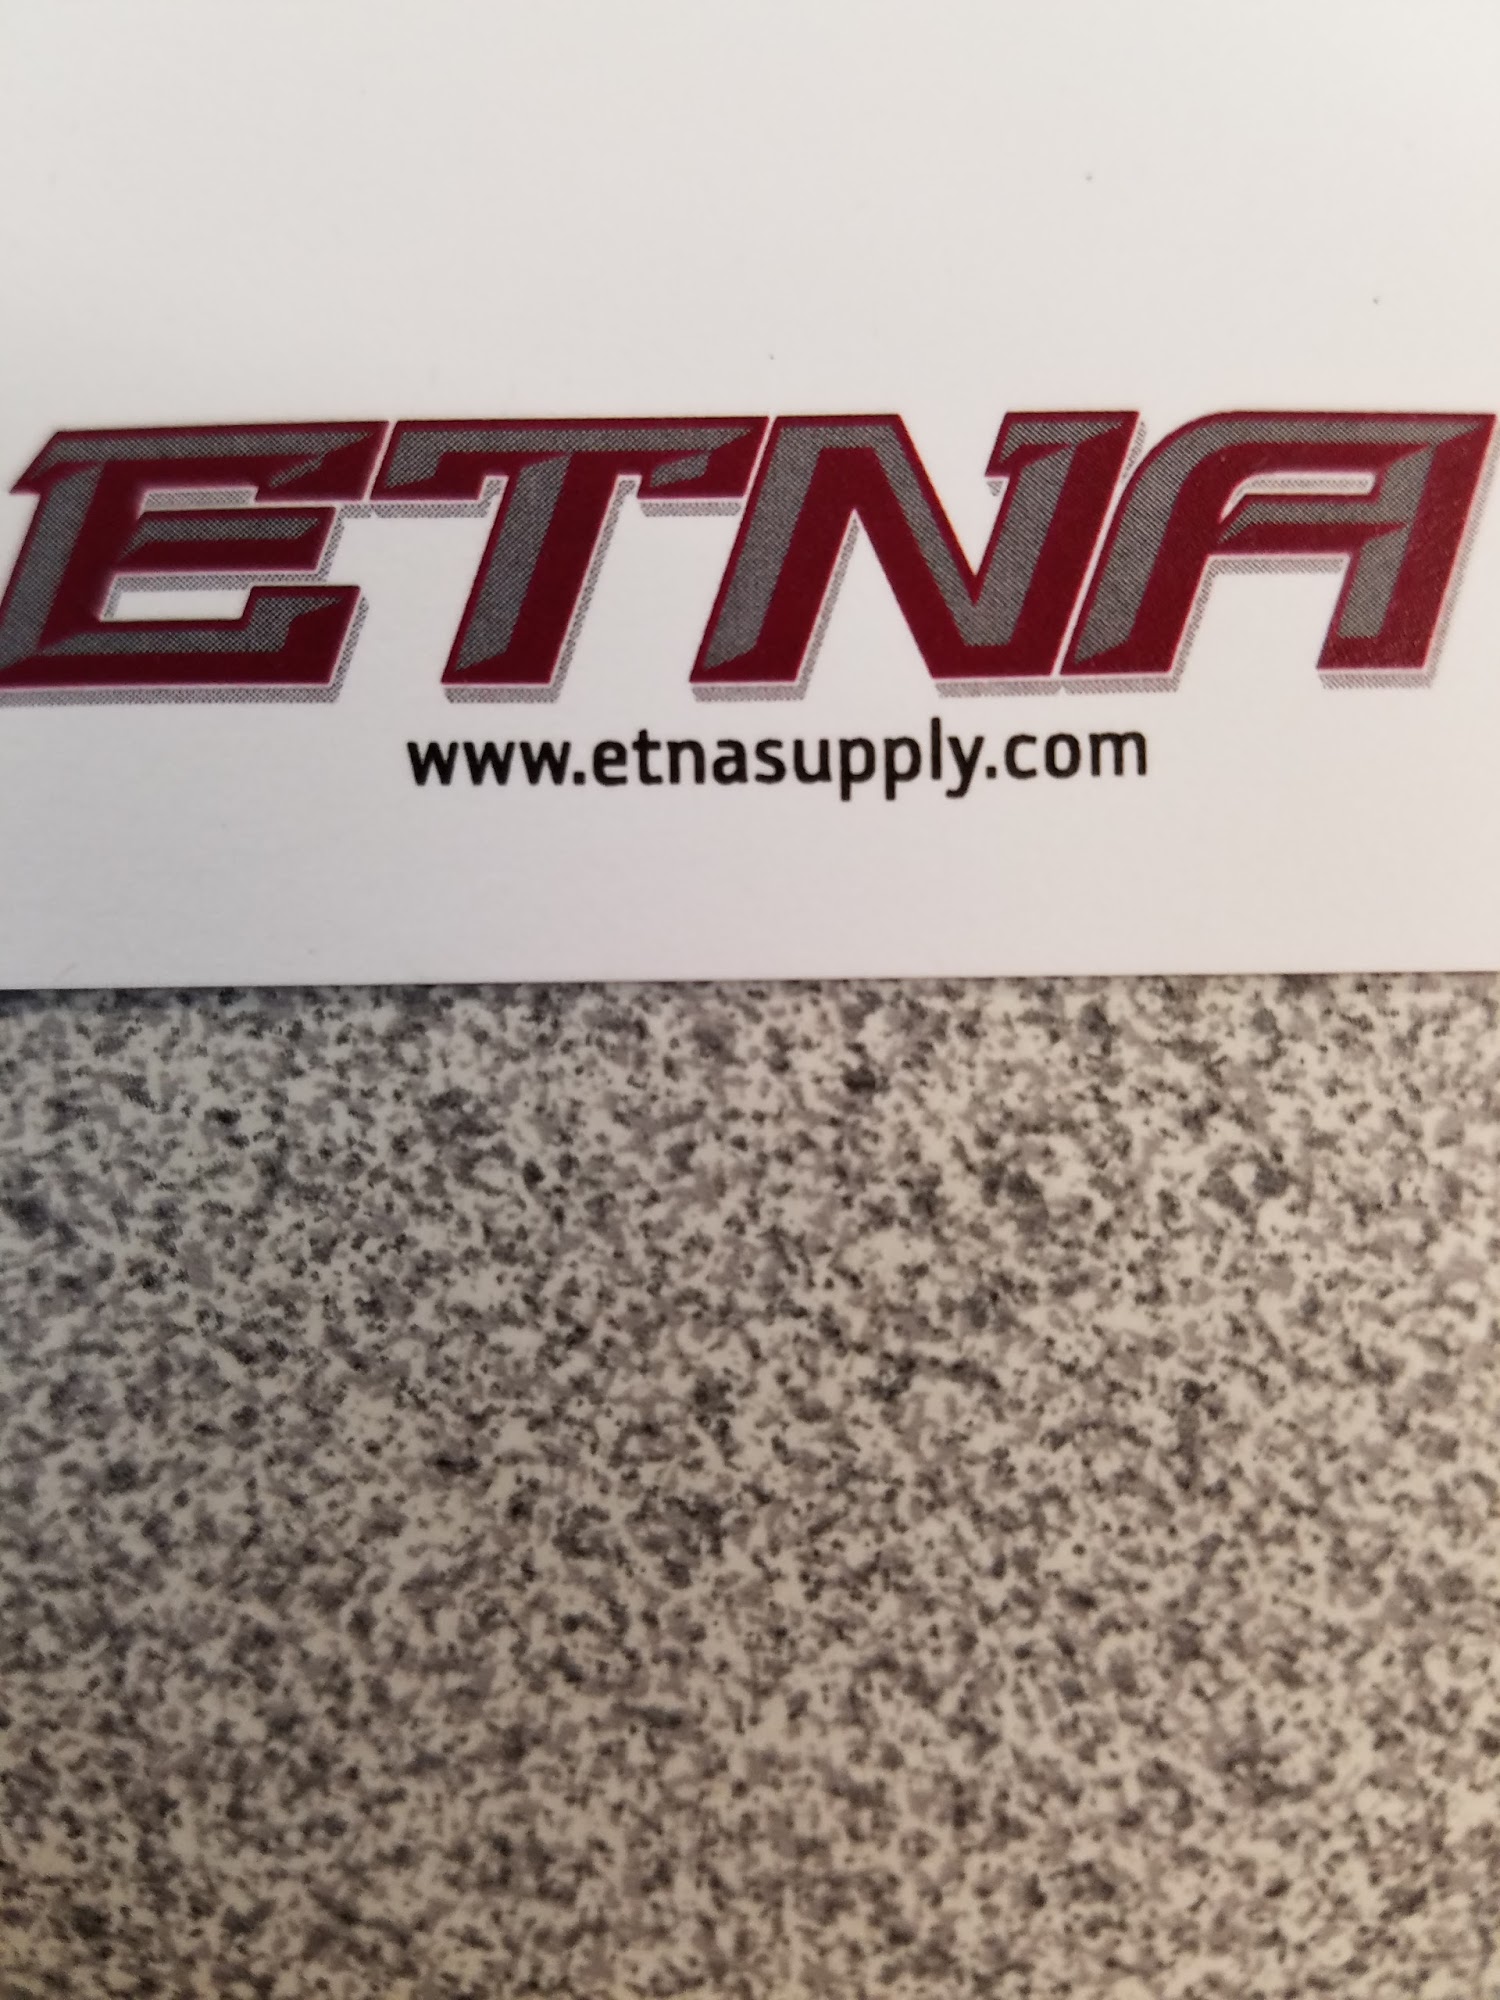 Etna Supply